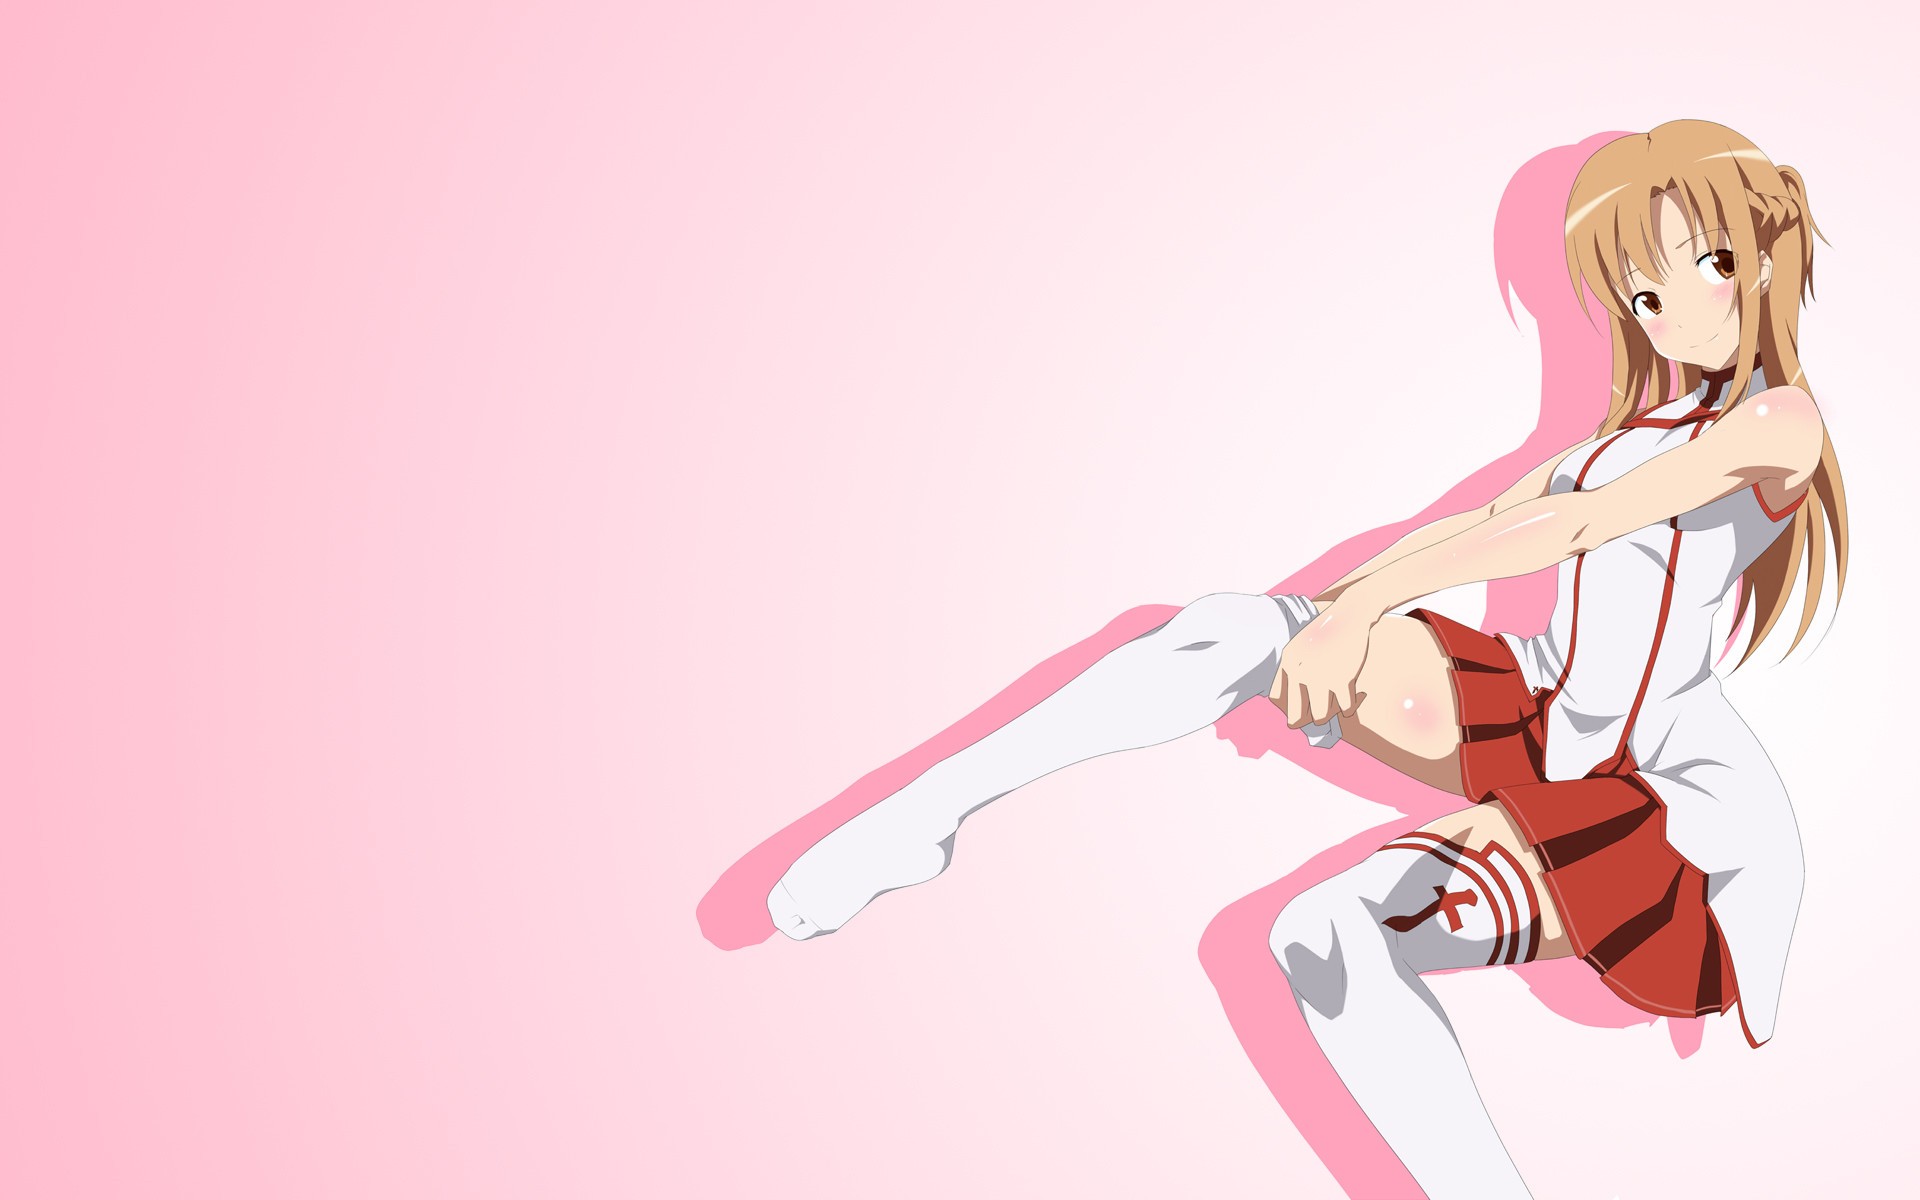 Anime 1920x1200 anime girls anime artwork Sword Art Online pink background simple background gradient stockings miniskirt brunette looking at viewer Yuuki Asuna (Sword Art Online)